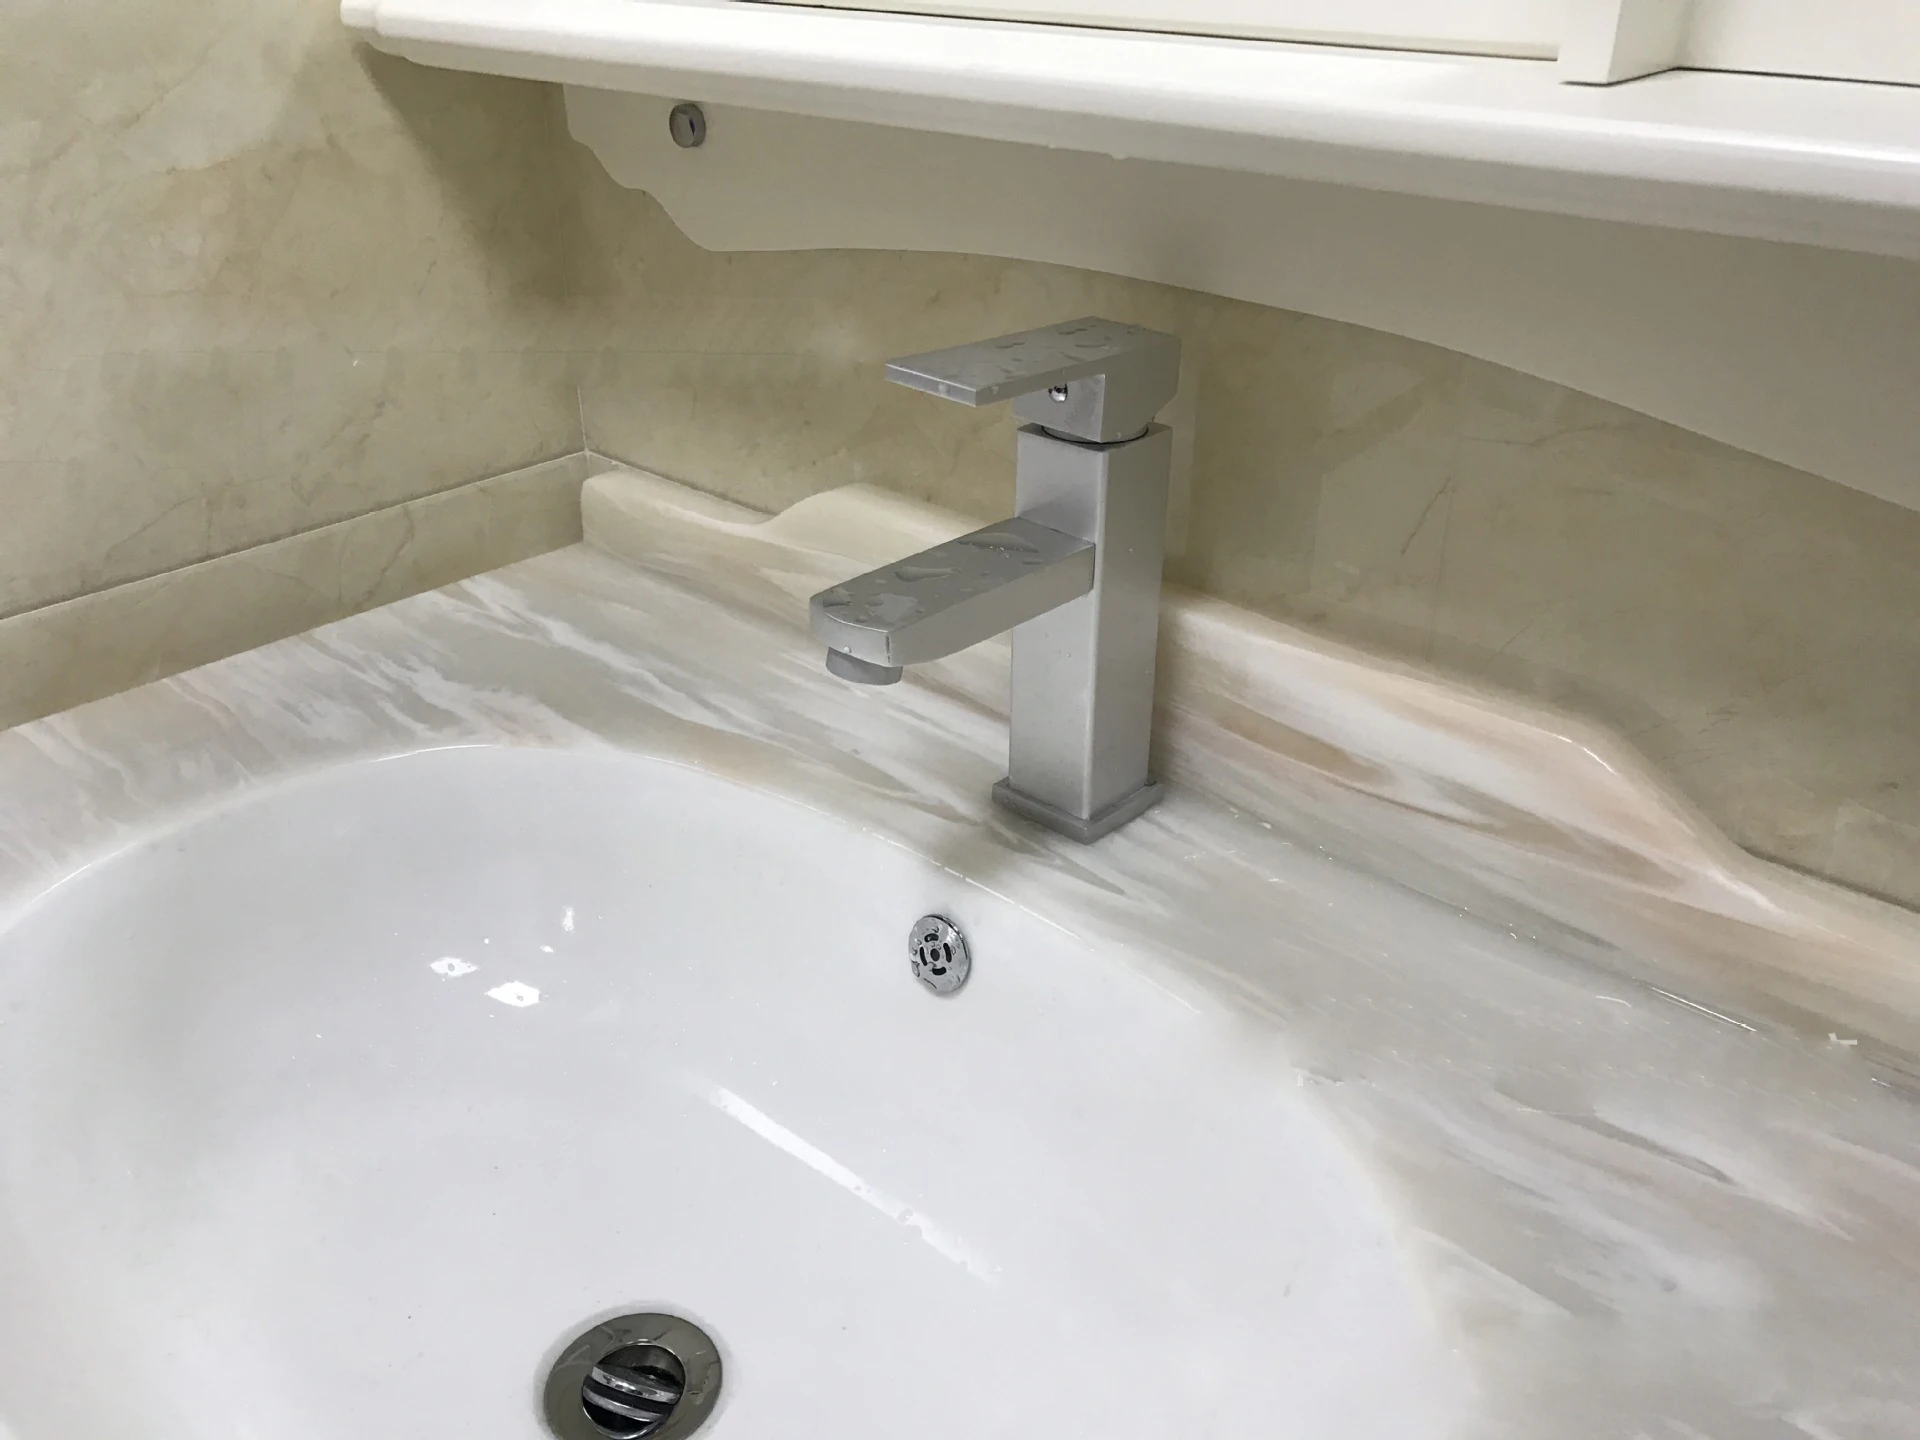 Black Space Aluminum Material Tap Mixer Bathroom Basin Faucet